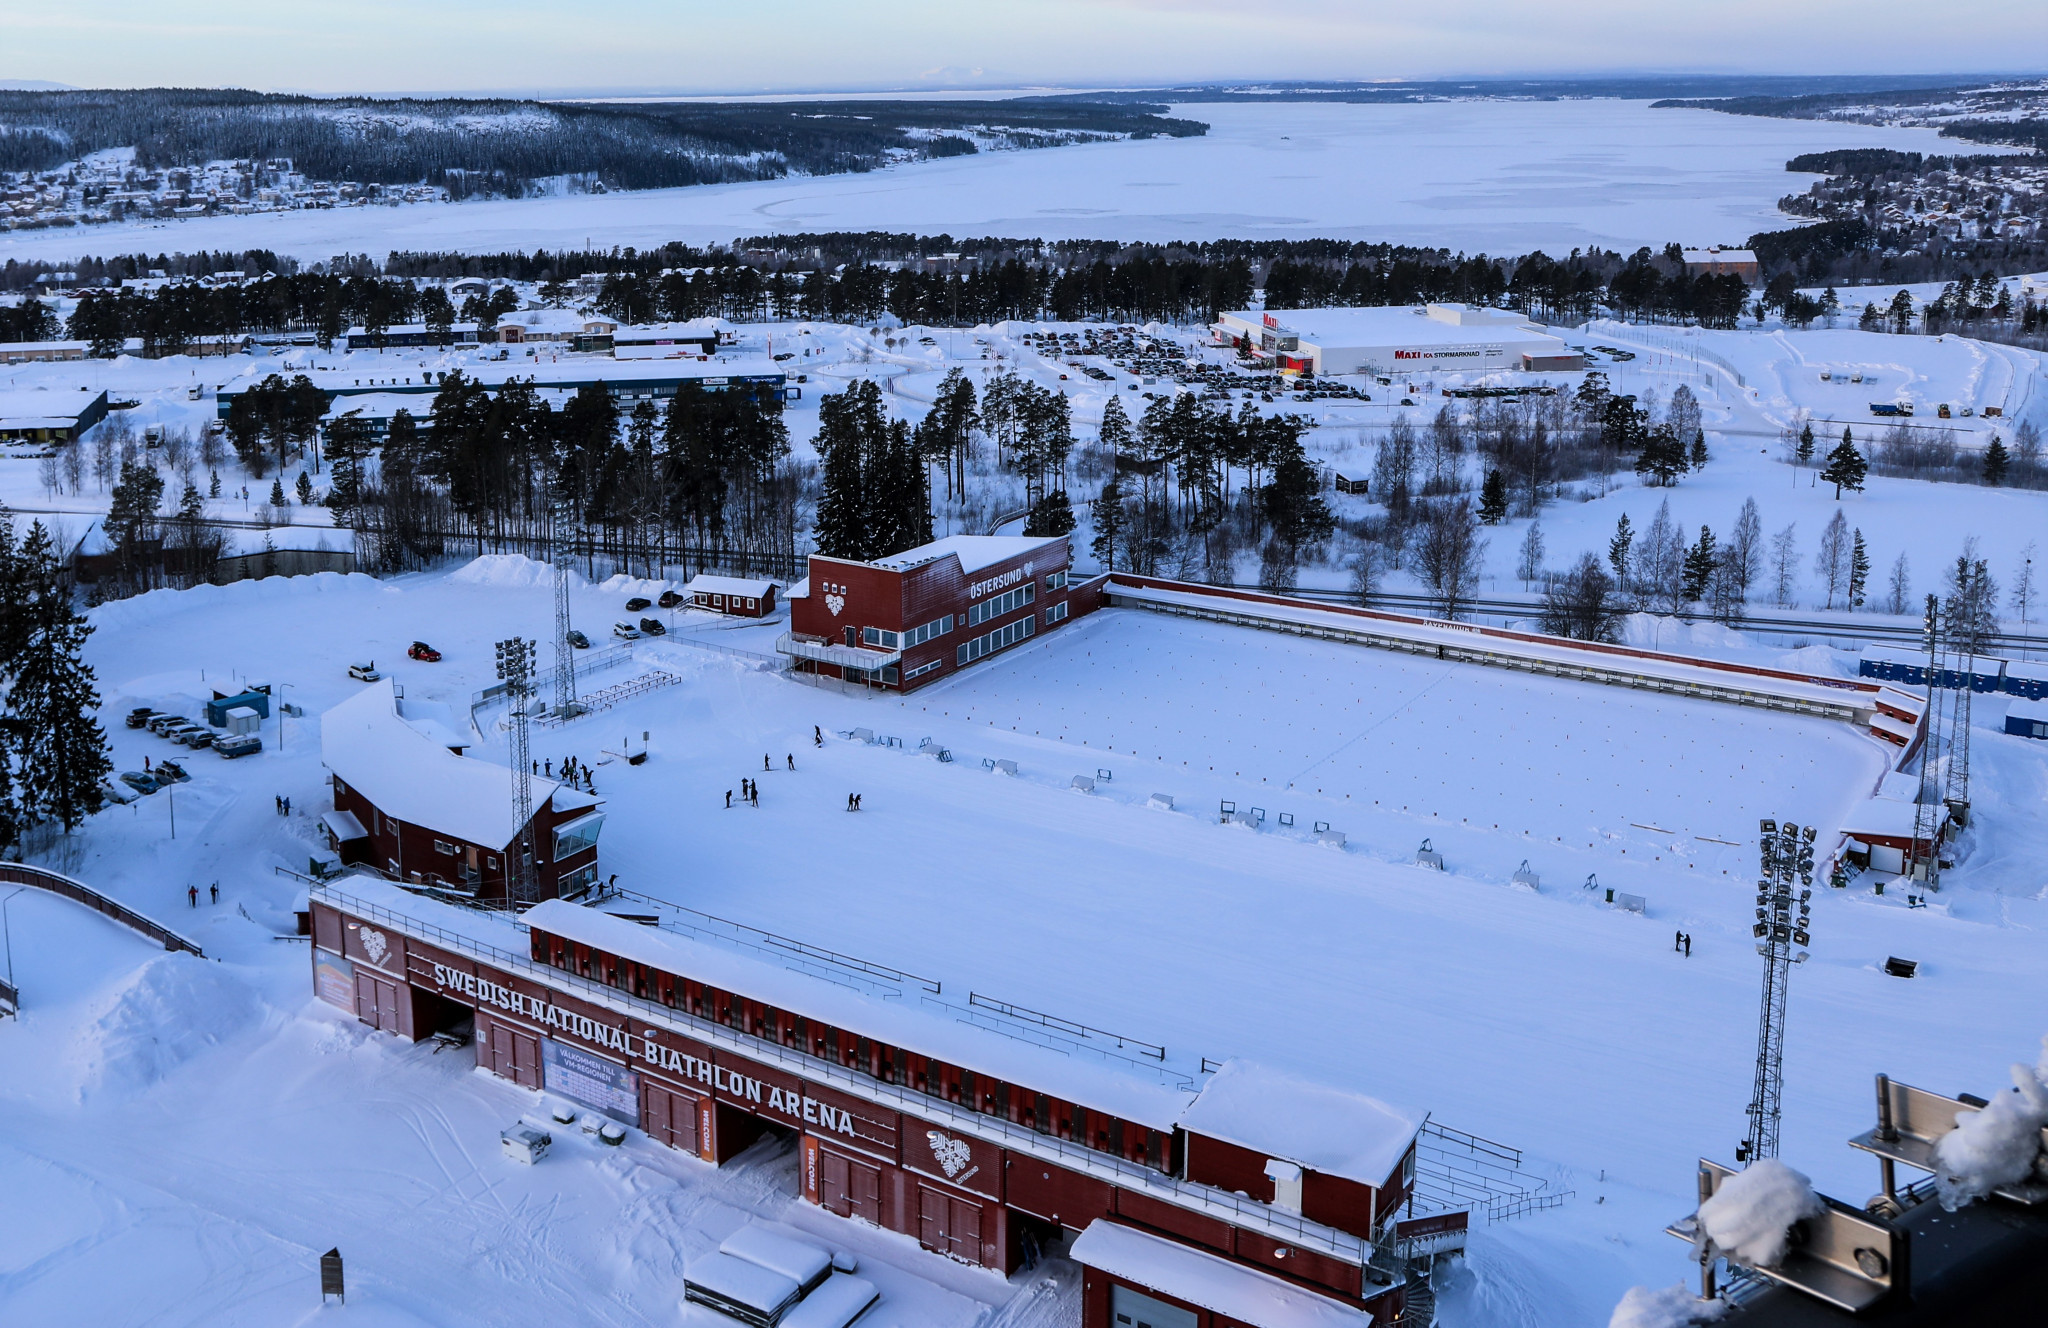 The Swedish National Biathlon Arena in Östersund ©Karl Nilsson